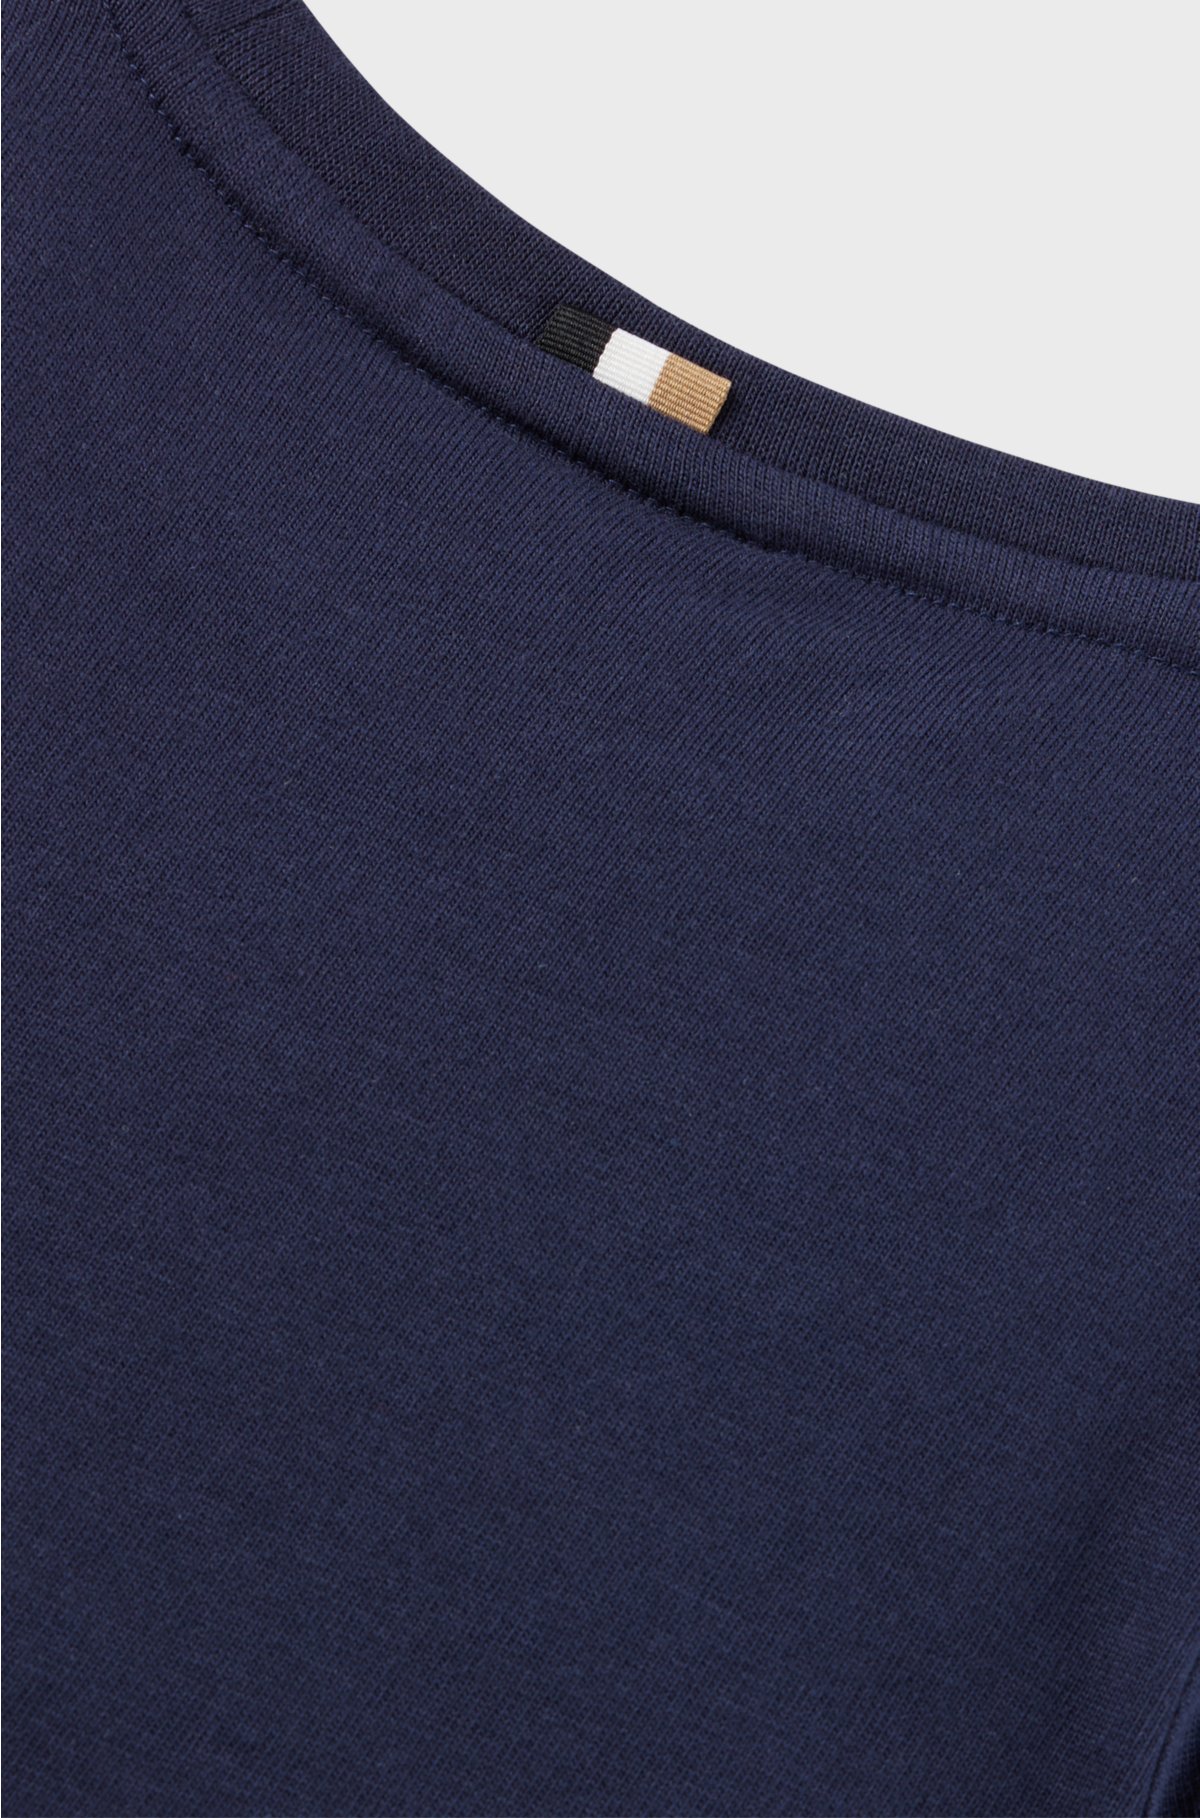 Kids' slim-fit long-sleeved T-shirt with hologram print, Dark Blue